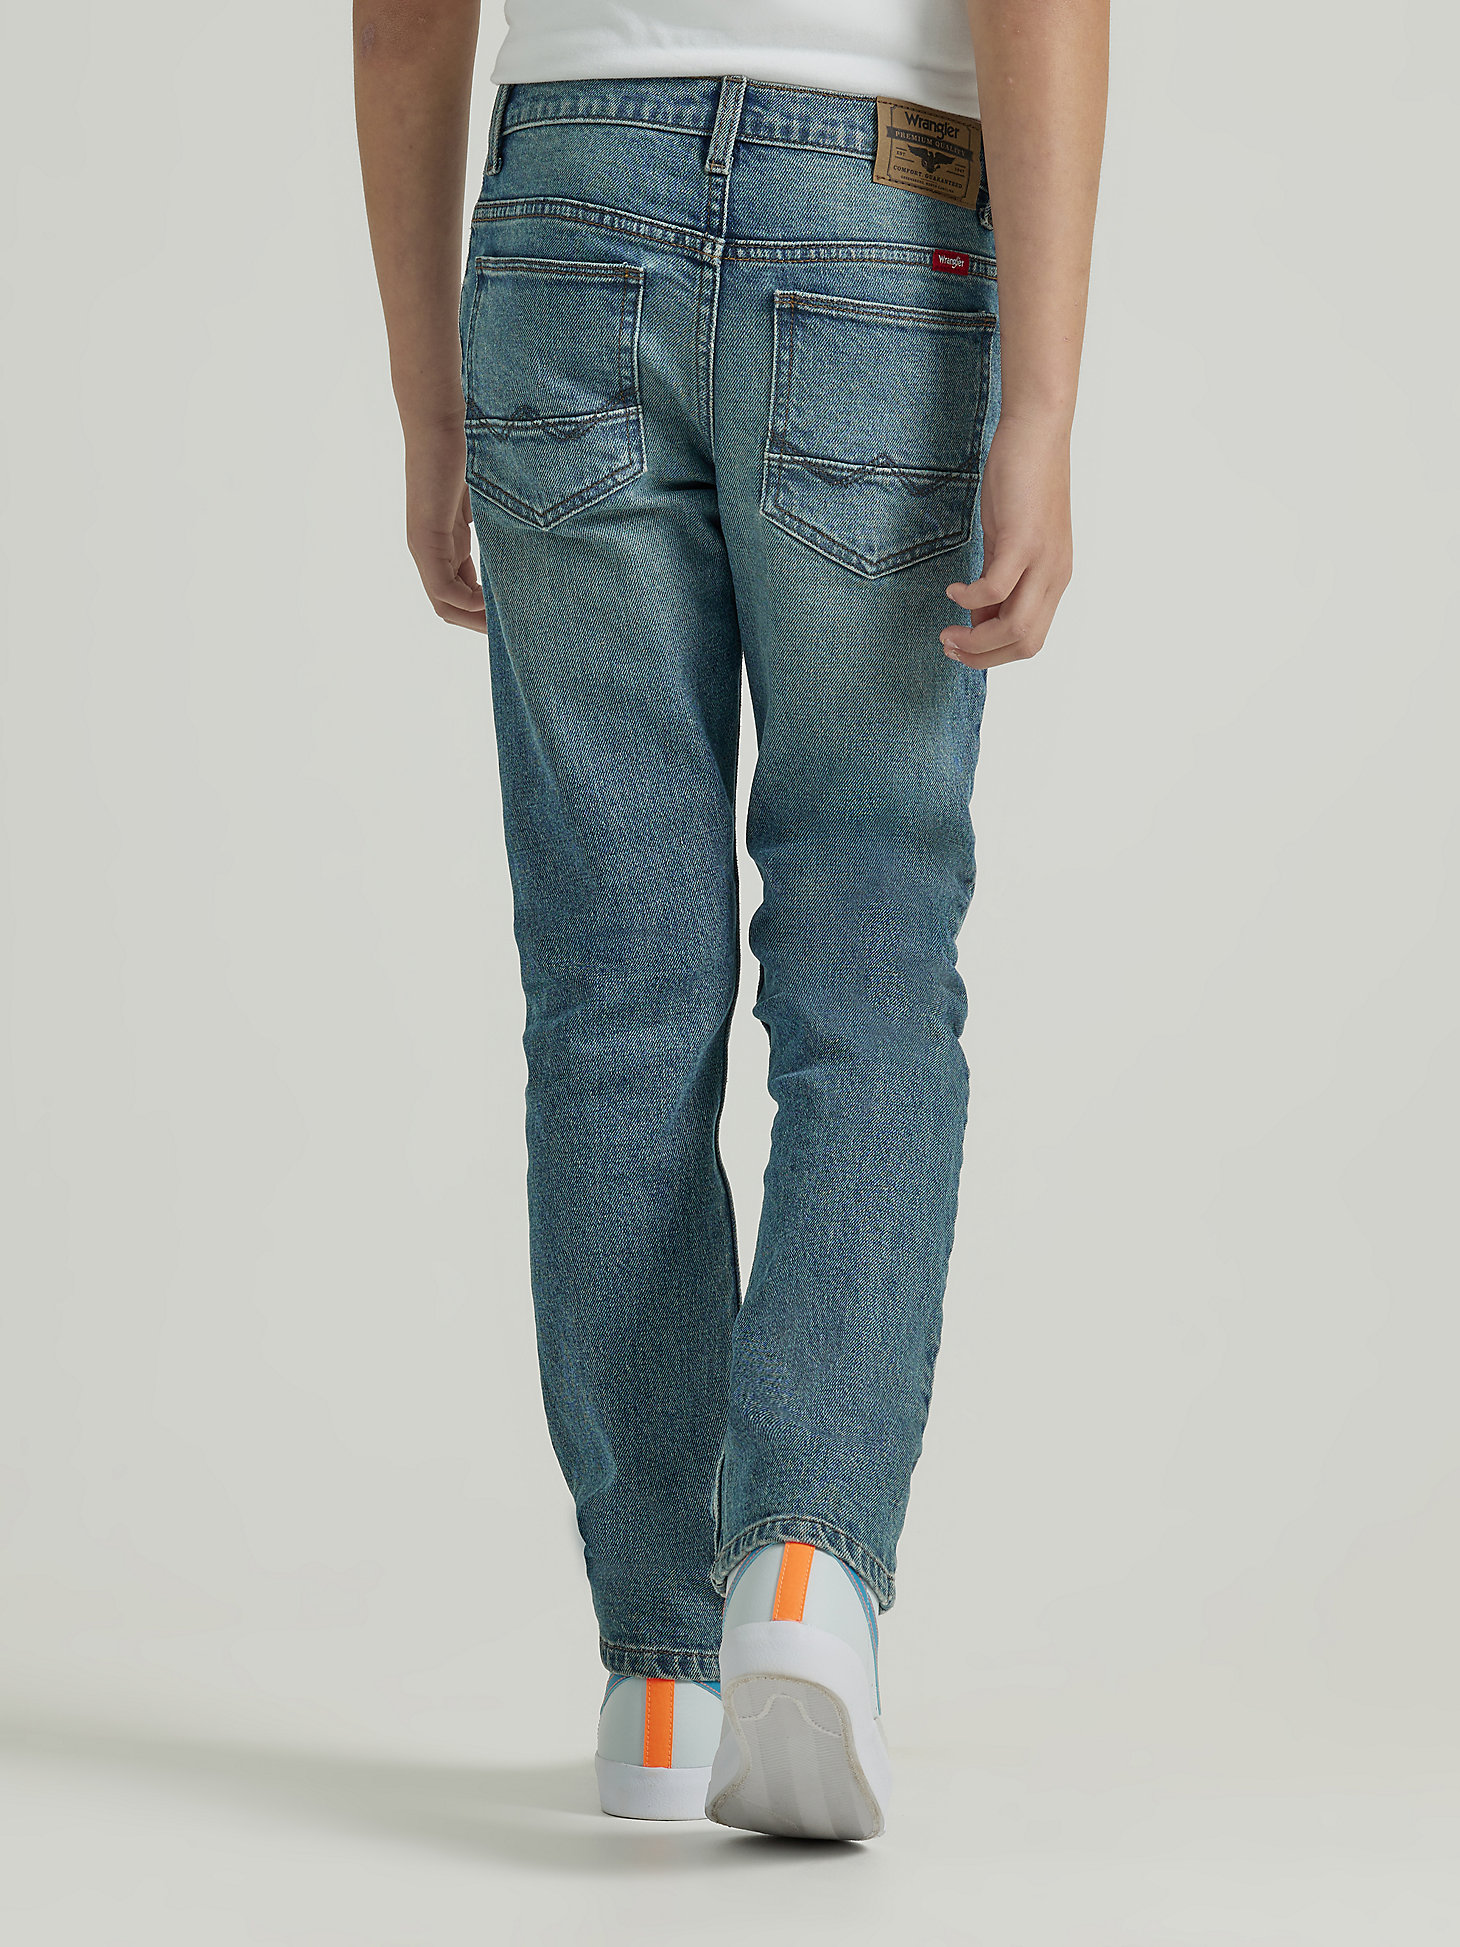 Boy's Indigood Slim Fit Jean (8-16) in Frontier alternative view 1